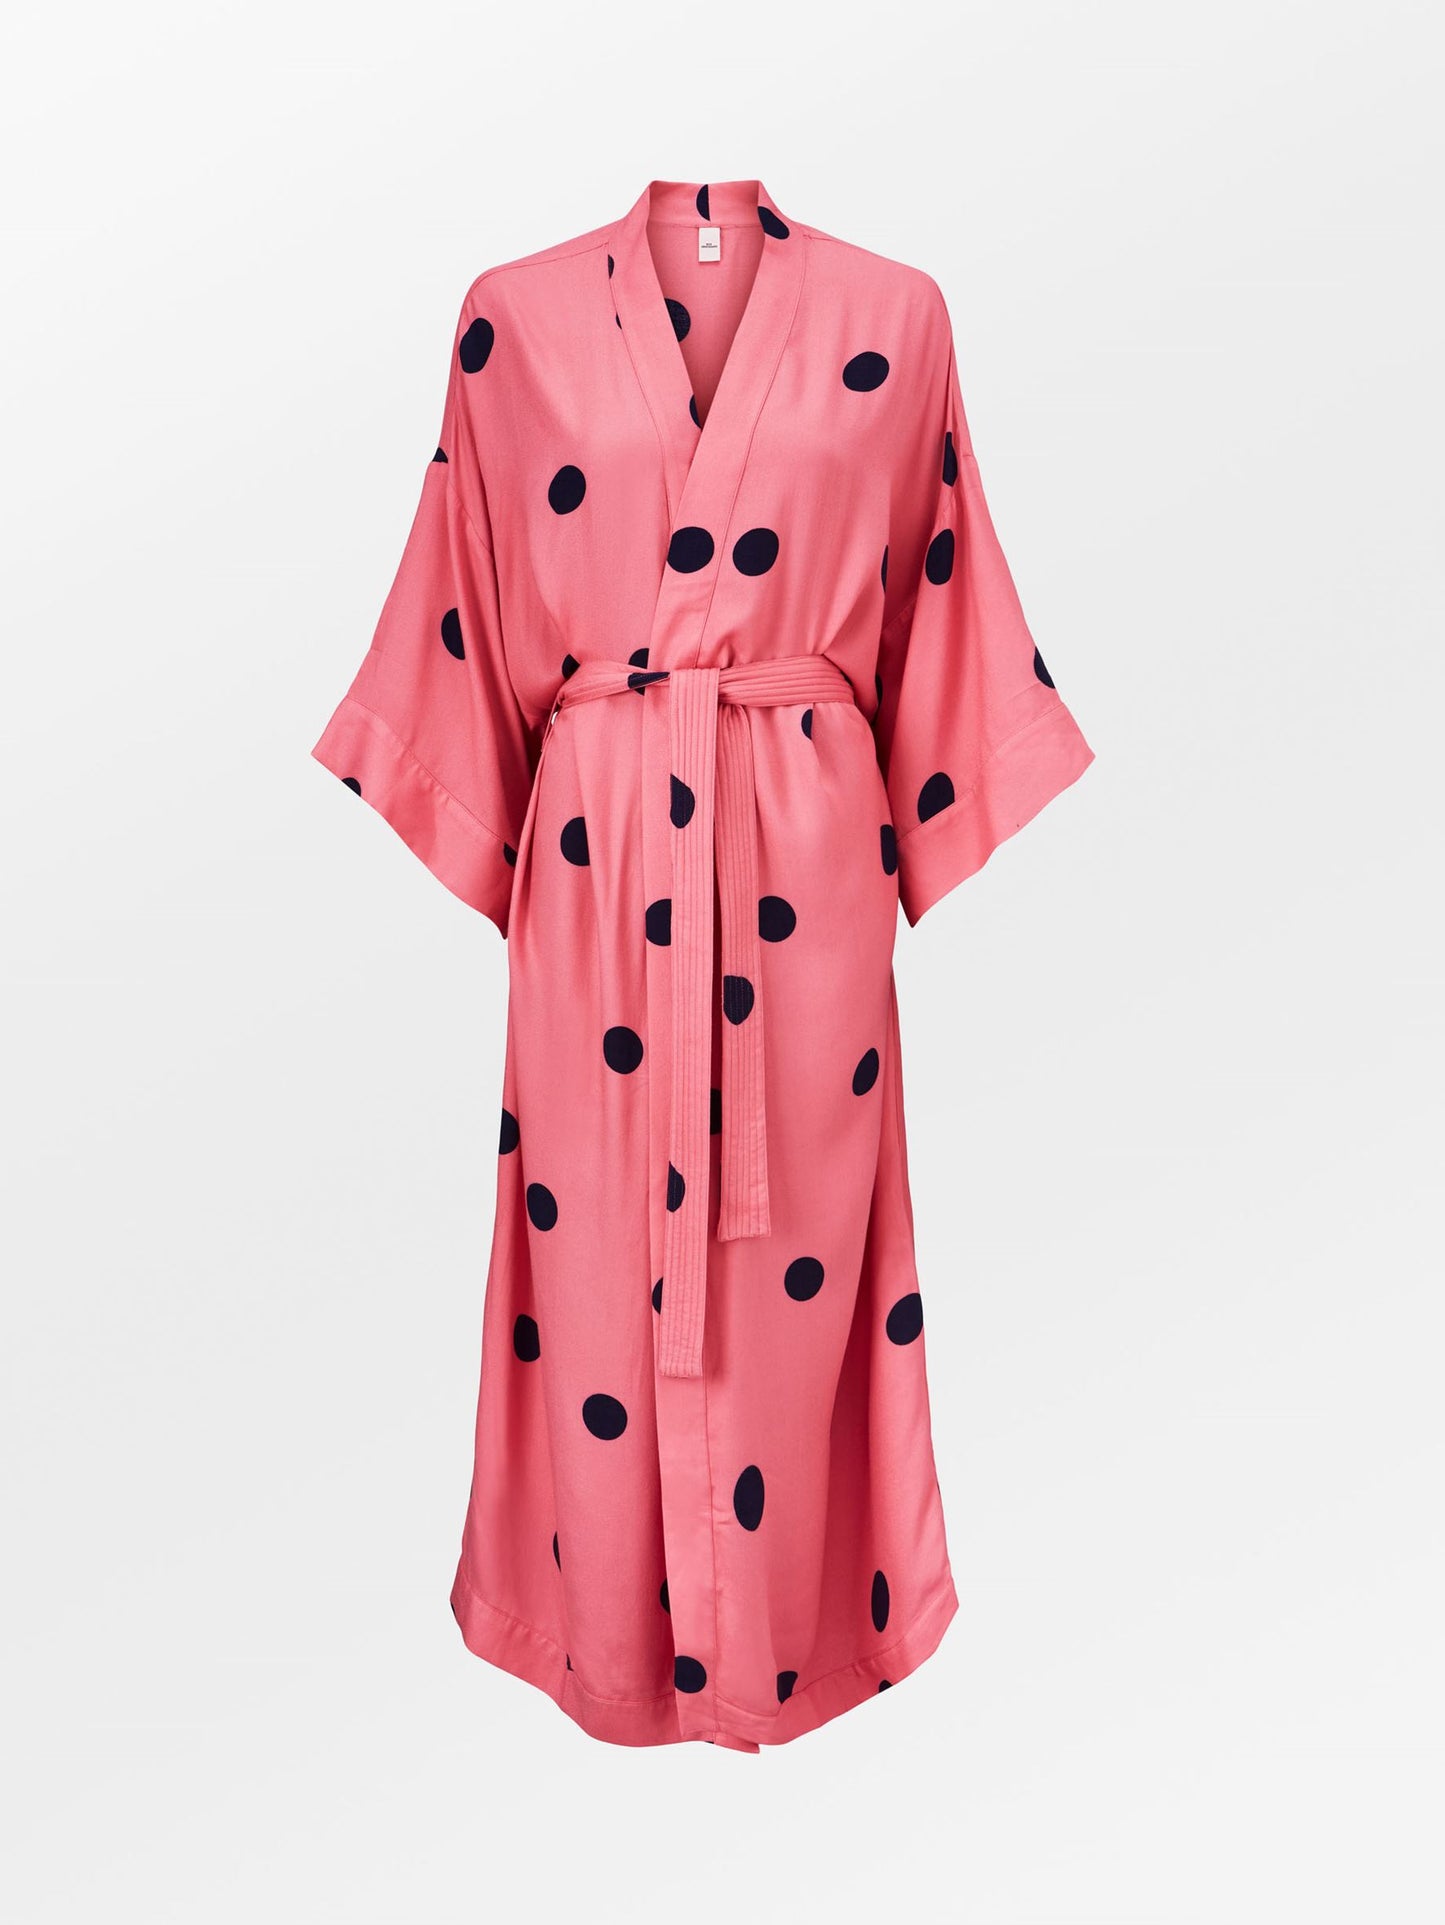 Becksöndergaard, Deimos Long Kimono - Strawberry Pink, archive, sale, sale, archive, sale